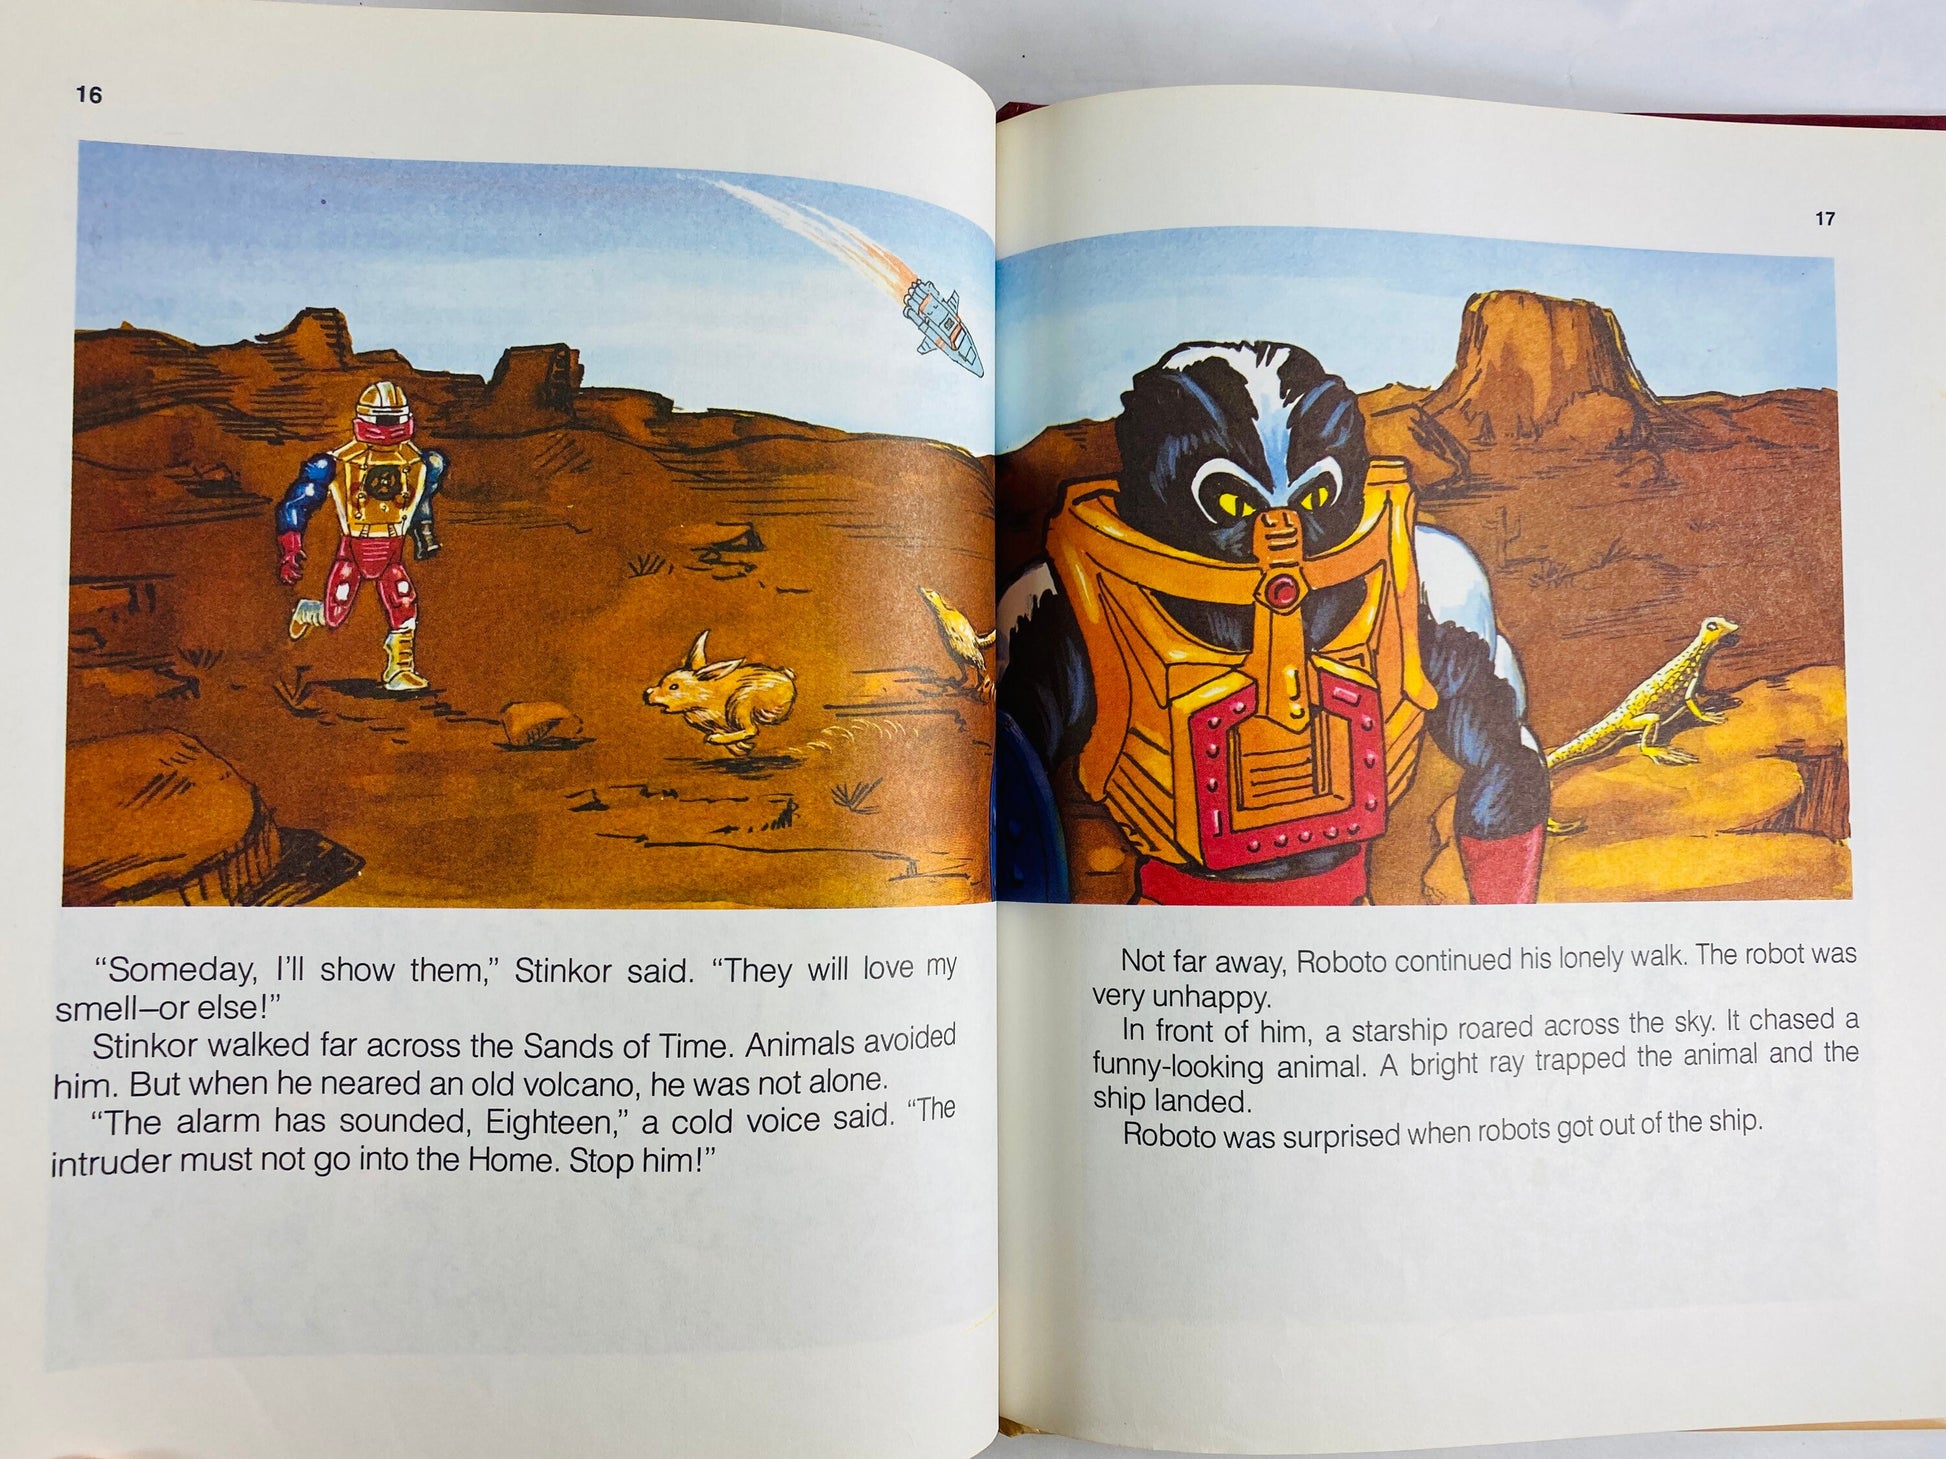 1984 He-Man Smells Trouble First Edition Vintage Mattel Golden book Masters of the Universe superhero Skeletor